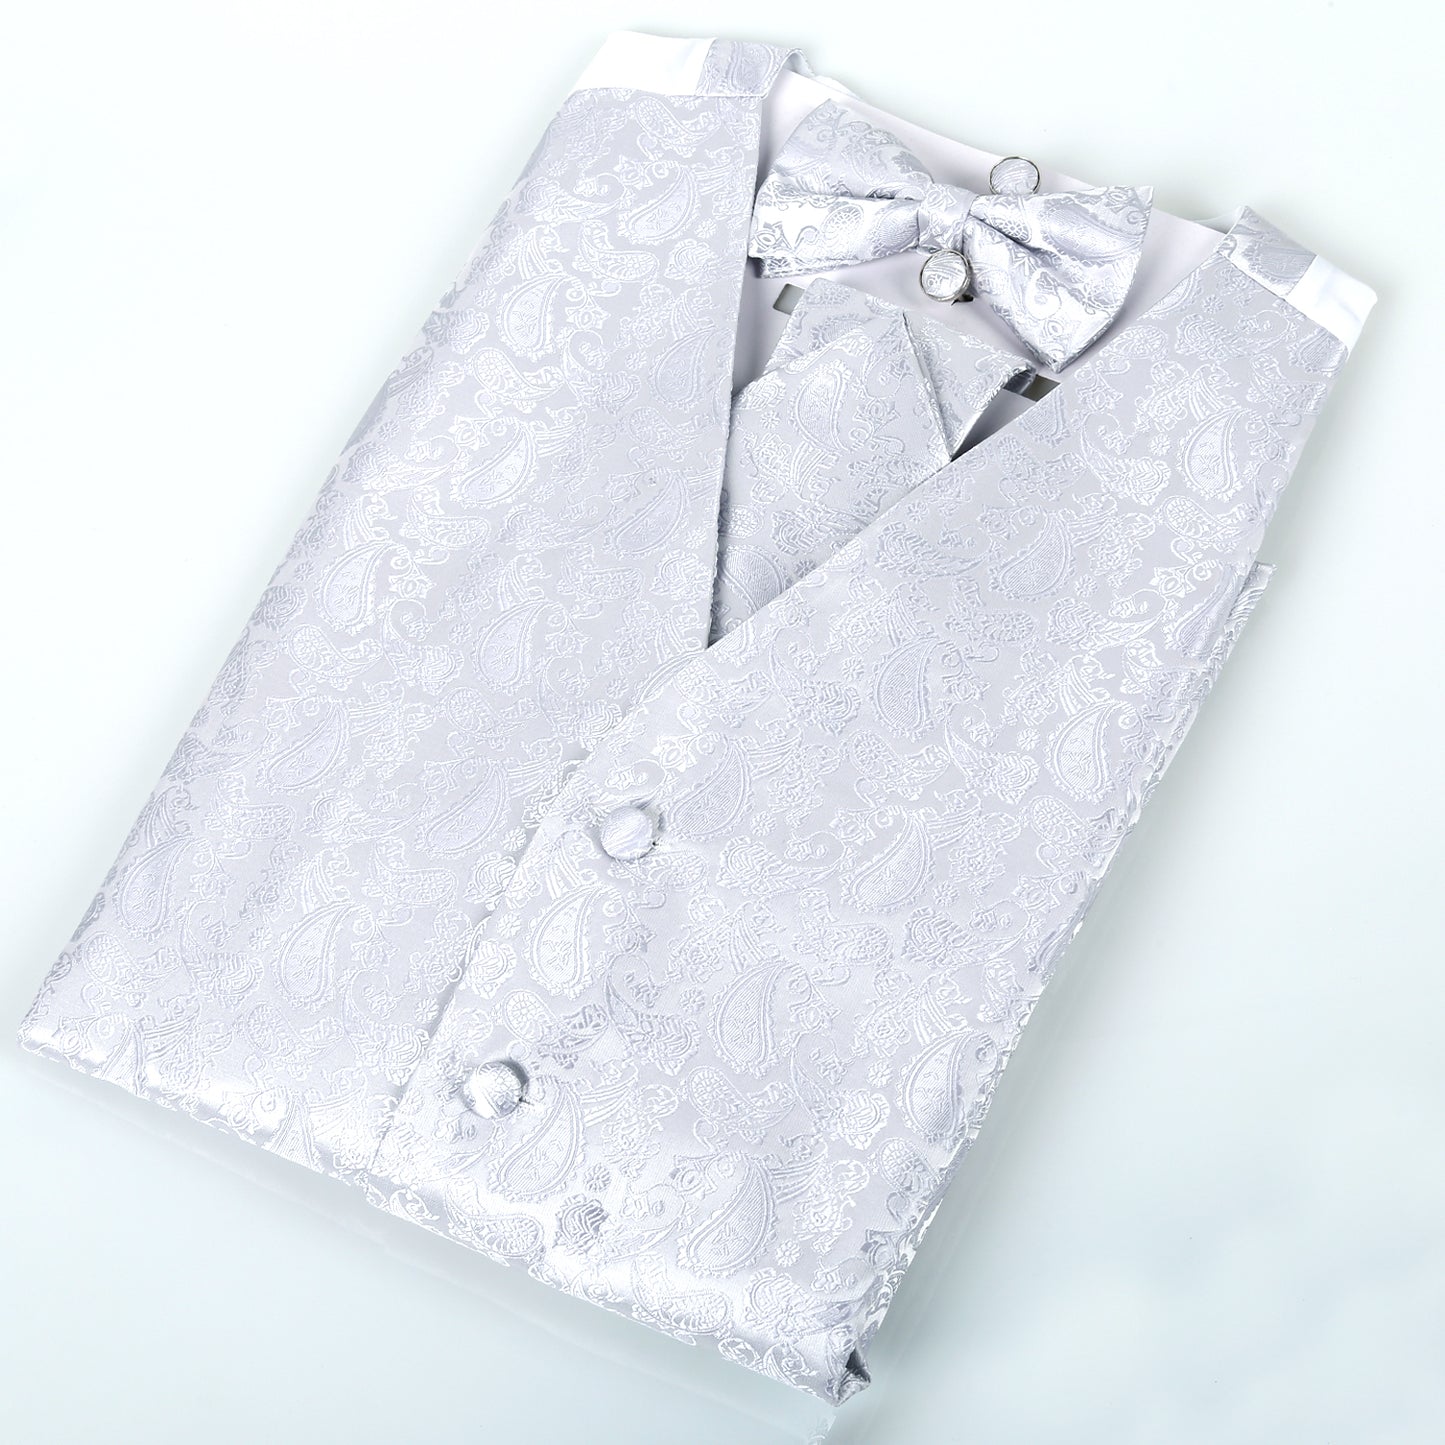 Men's Paisley Jacquard Single Breasted V-Neck Tuxedo Vest, Pre-tied Bow Tie, 9cm Necktie, Cufflinks and Pocket Square Set, 189-Silver